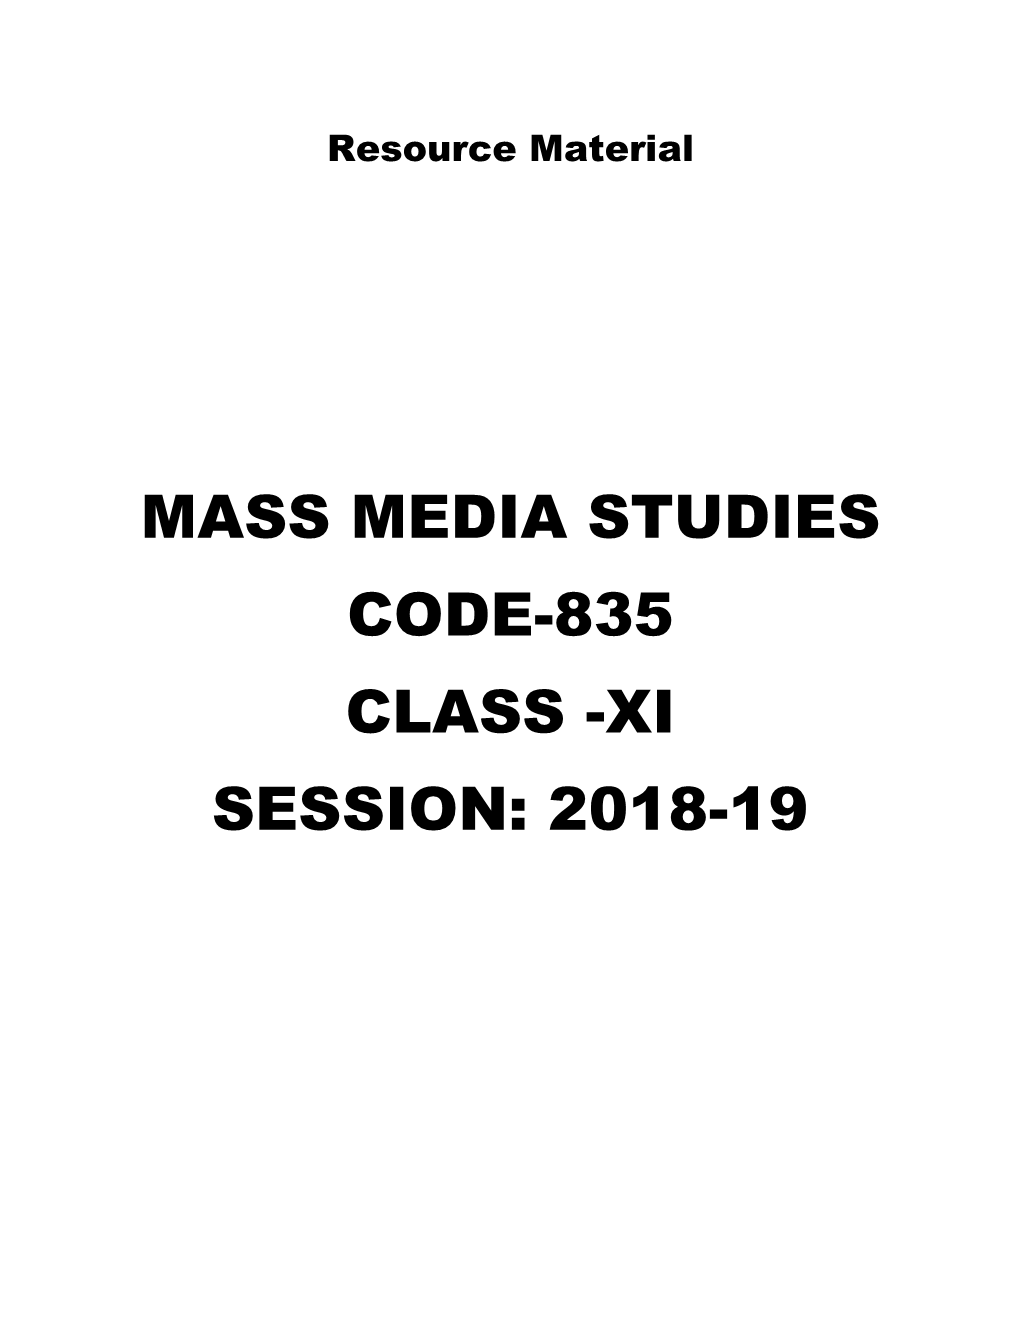 Mass Media Studies Code-835 Class -Xi Session: 2018-19